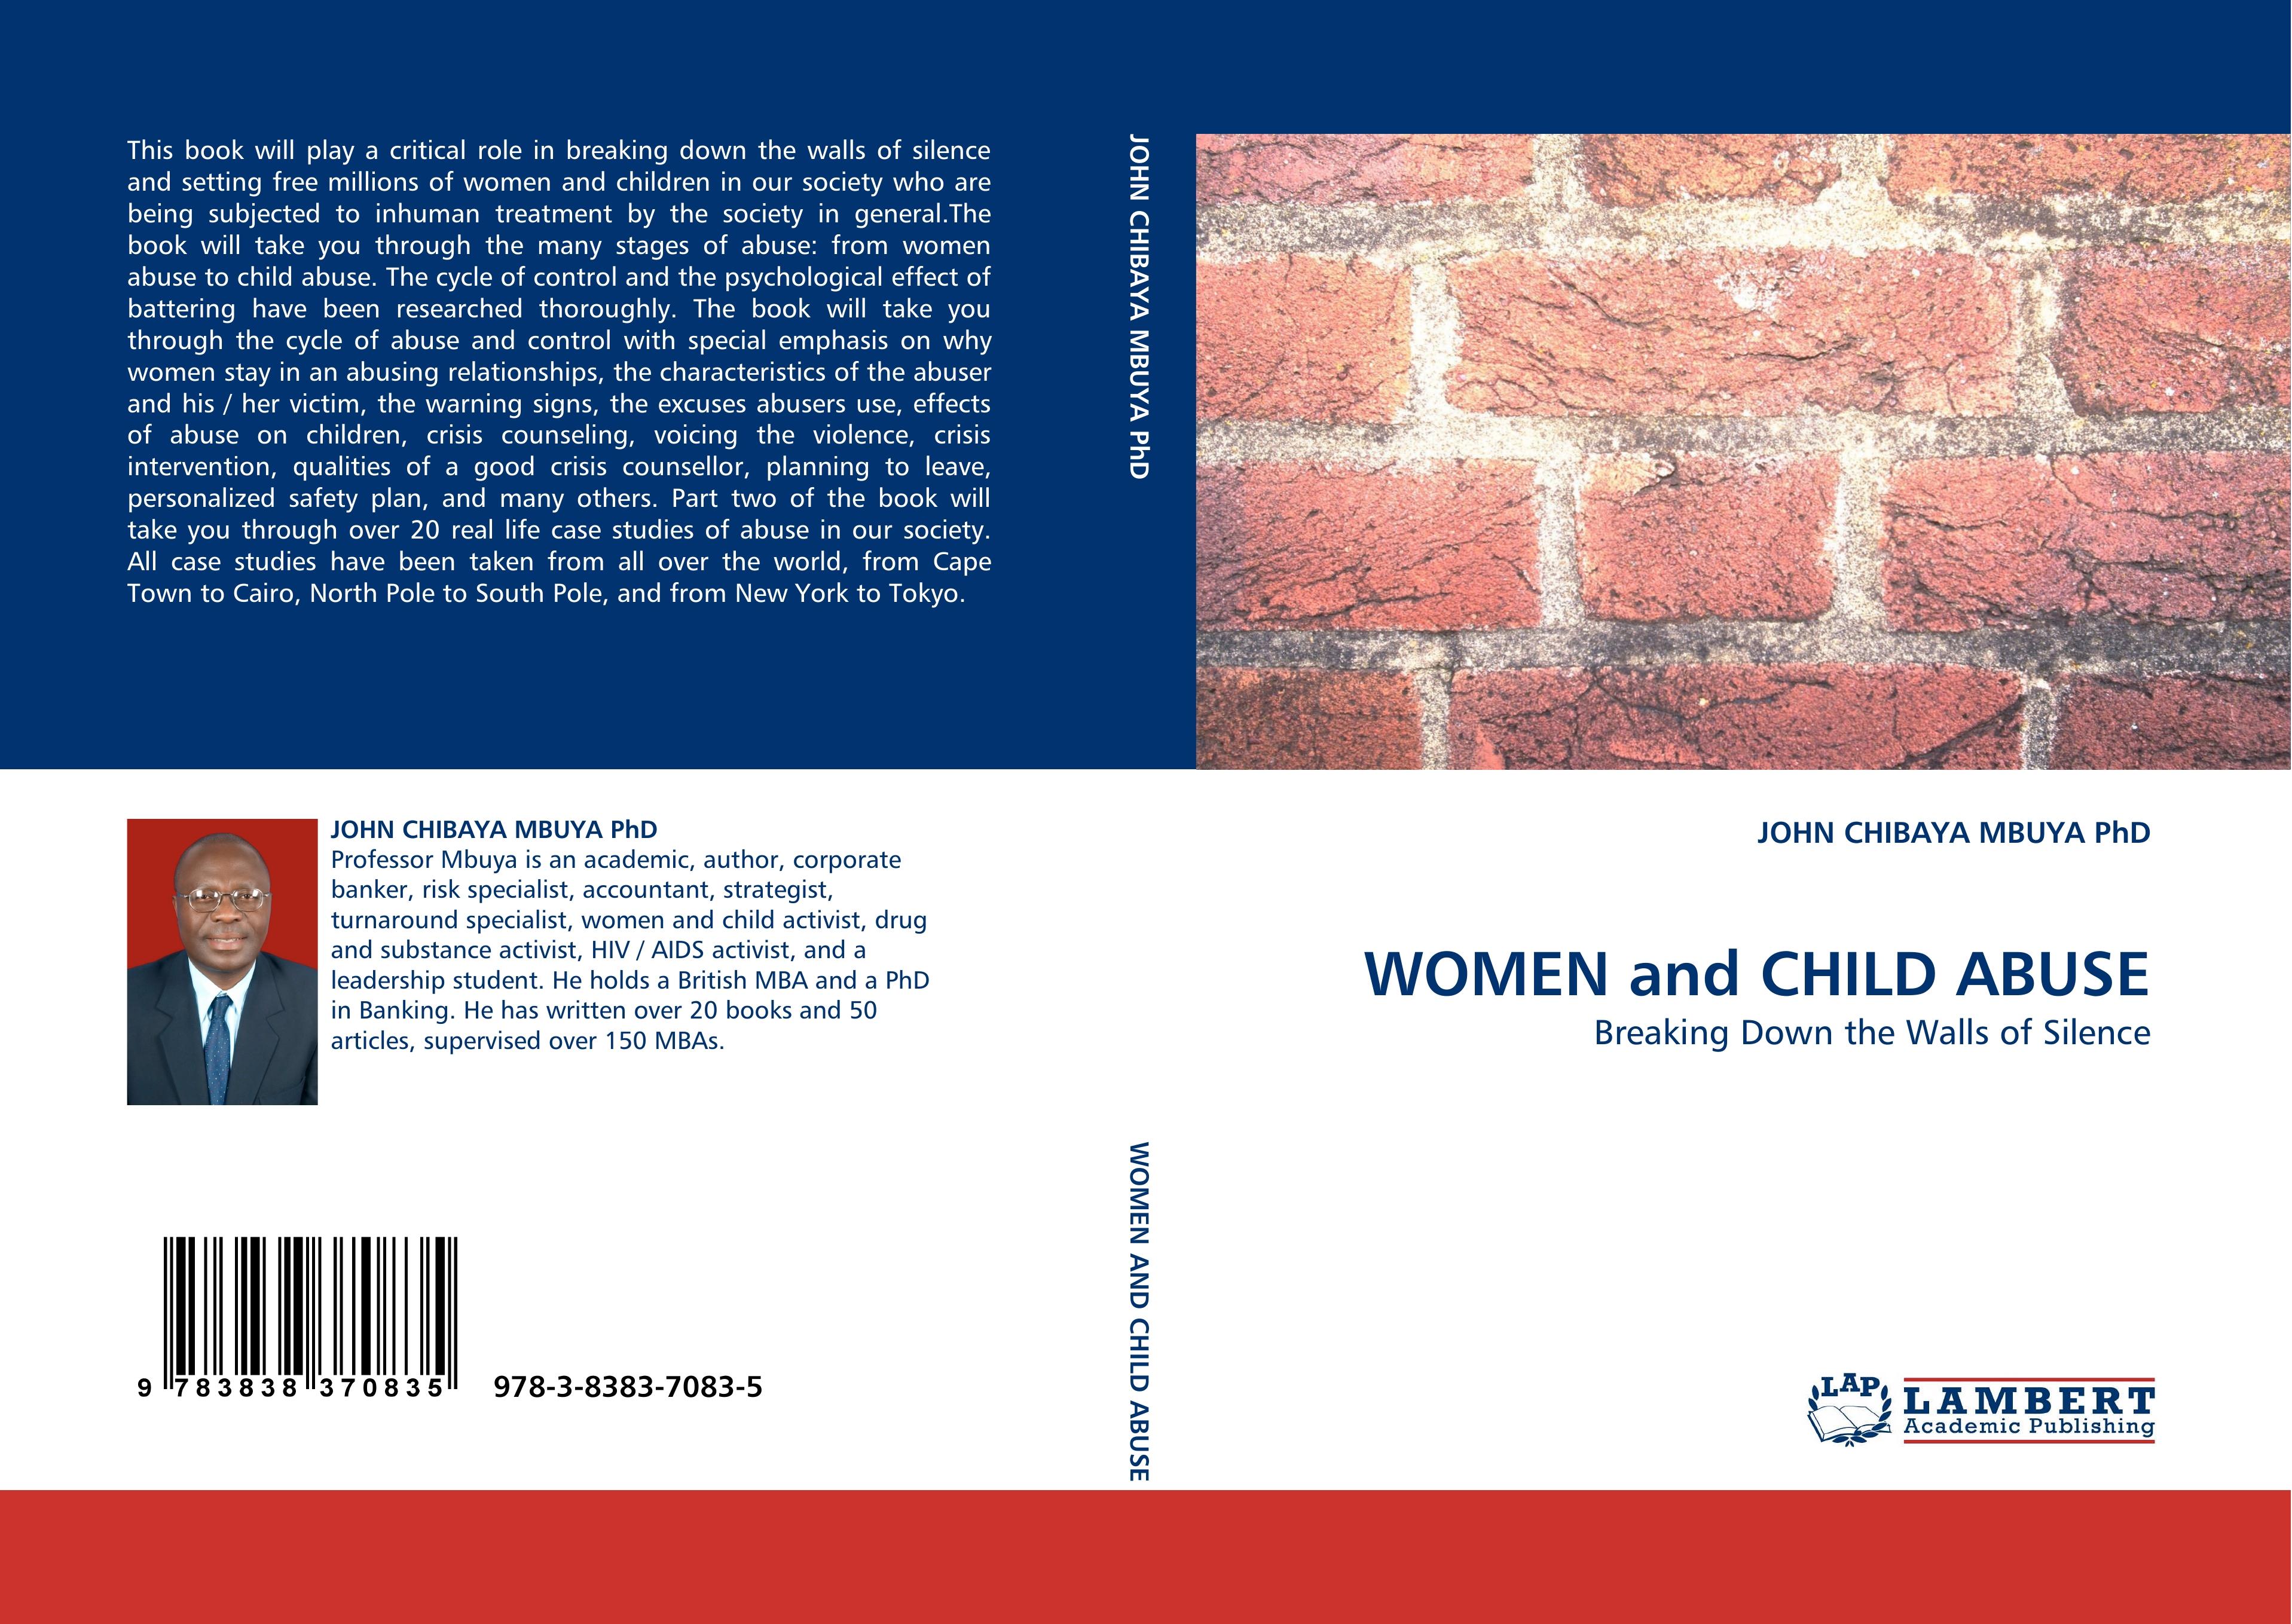 WOMEN and CHILD ABUSE / Breaking Down the Walls of Silence / John Chibaya Mbuya / Taschenbuch / Paperback / 240 S. / Englisch / 2010 / LAP LAMBERT Academic Publishing / EAN 9783838370835 - Chibaya Mbuya, John